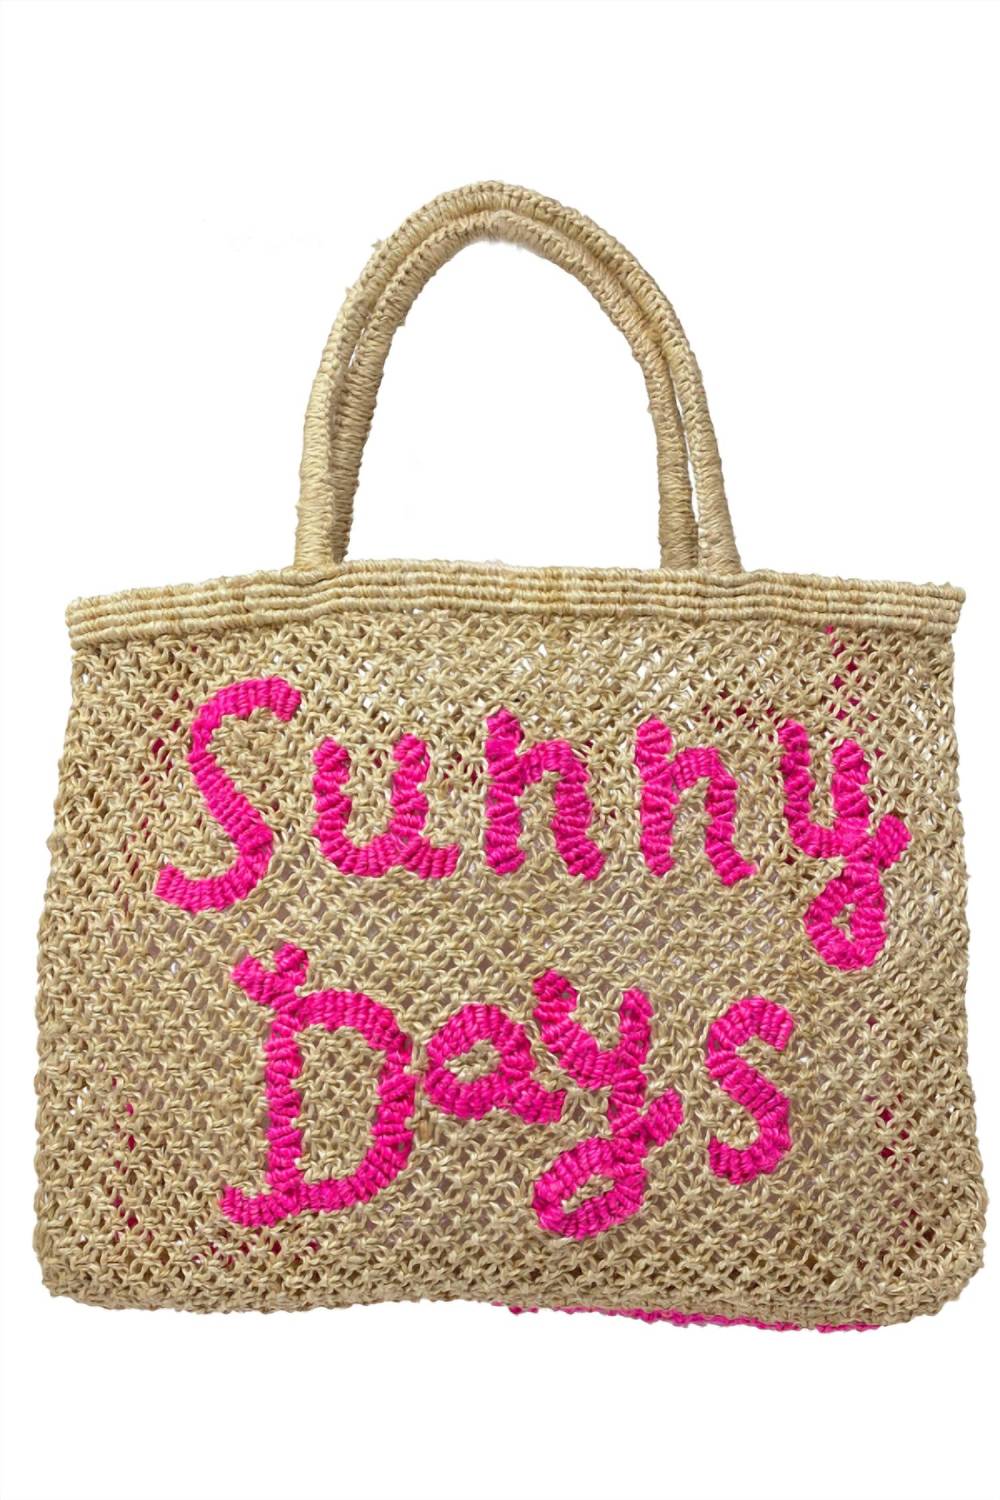 The Jacksons - Sunny Days Bag